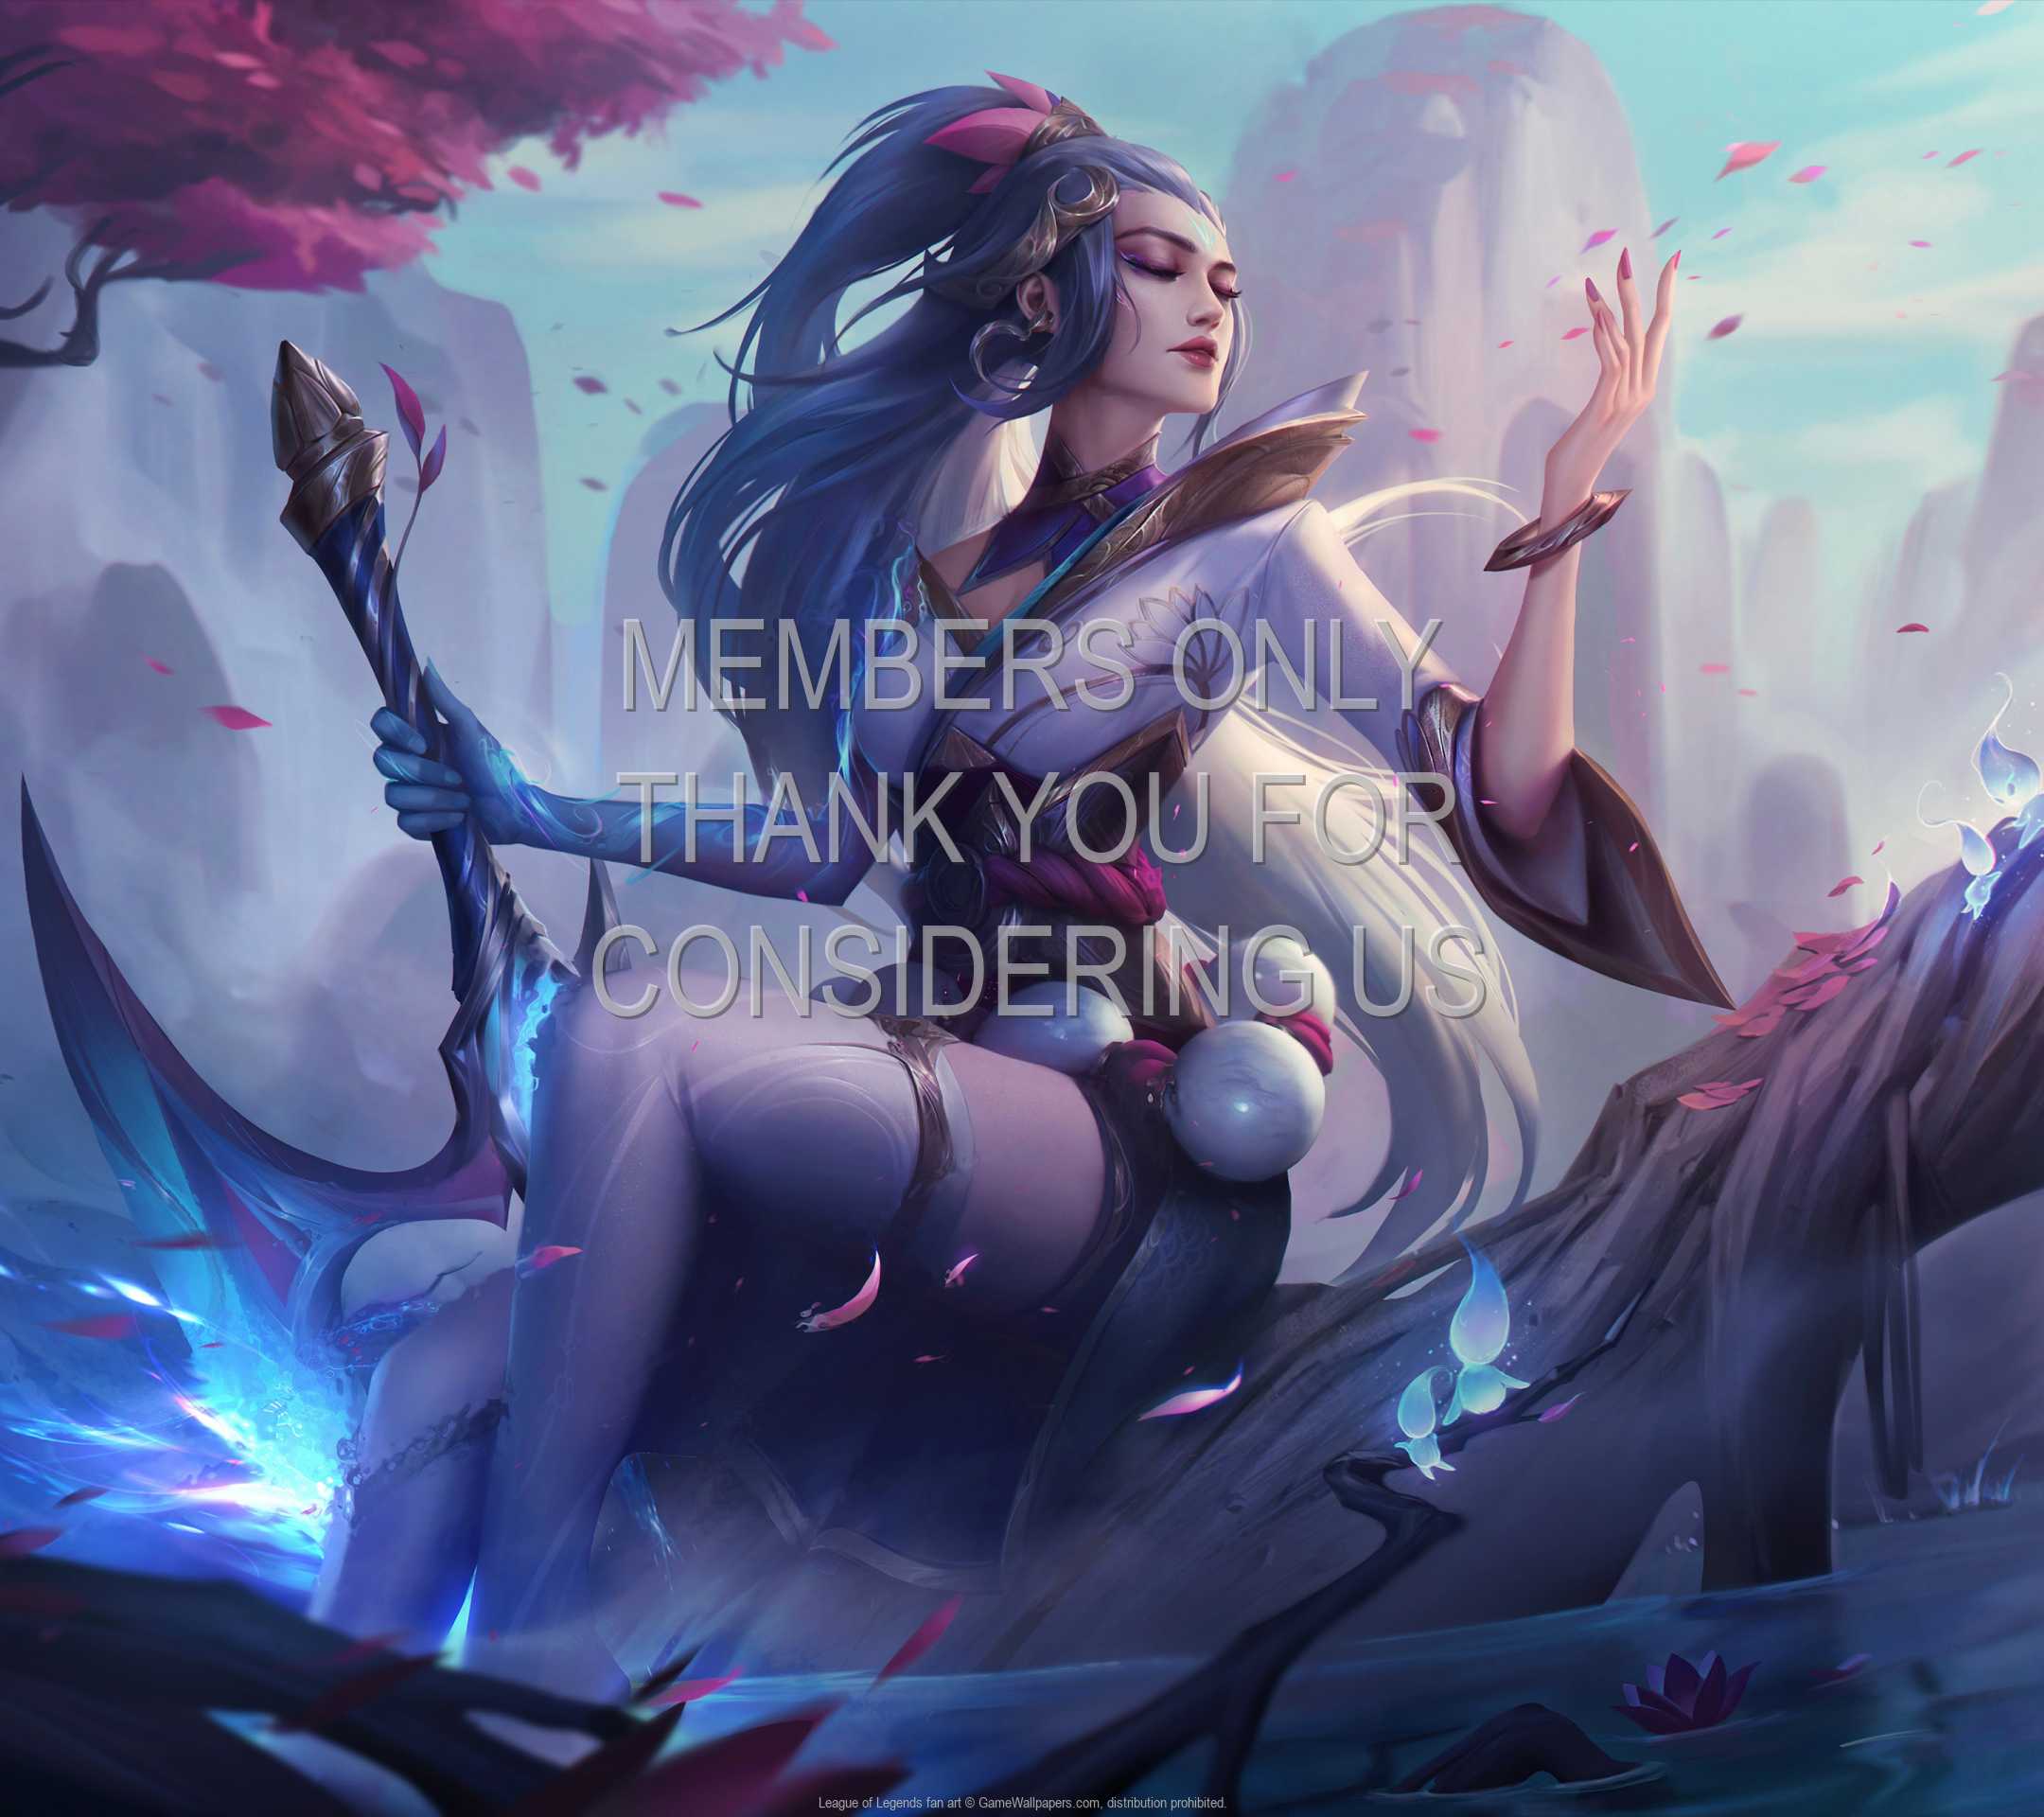 League of Legends fan art 1080p%20Horizontal Mobile wallpaper or background 29